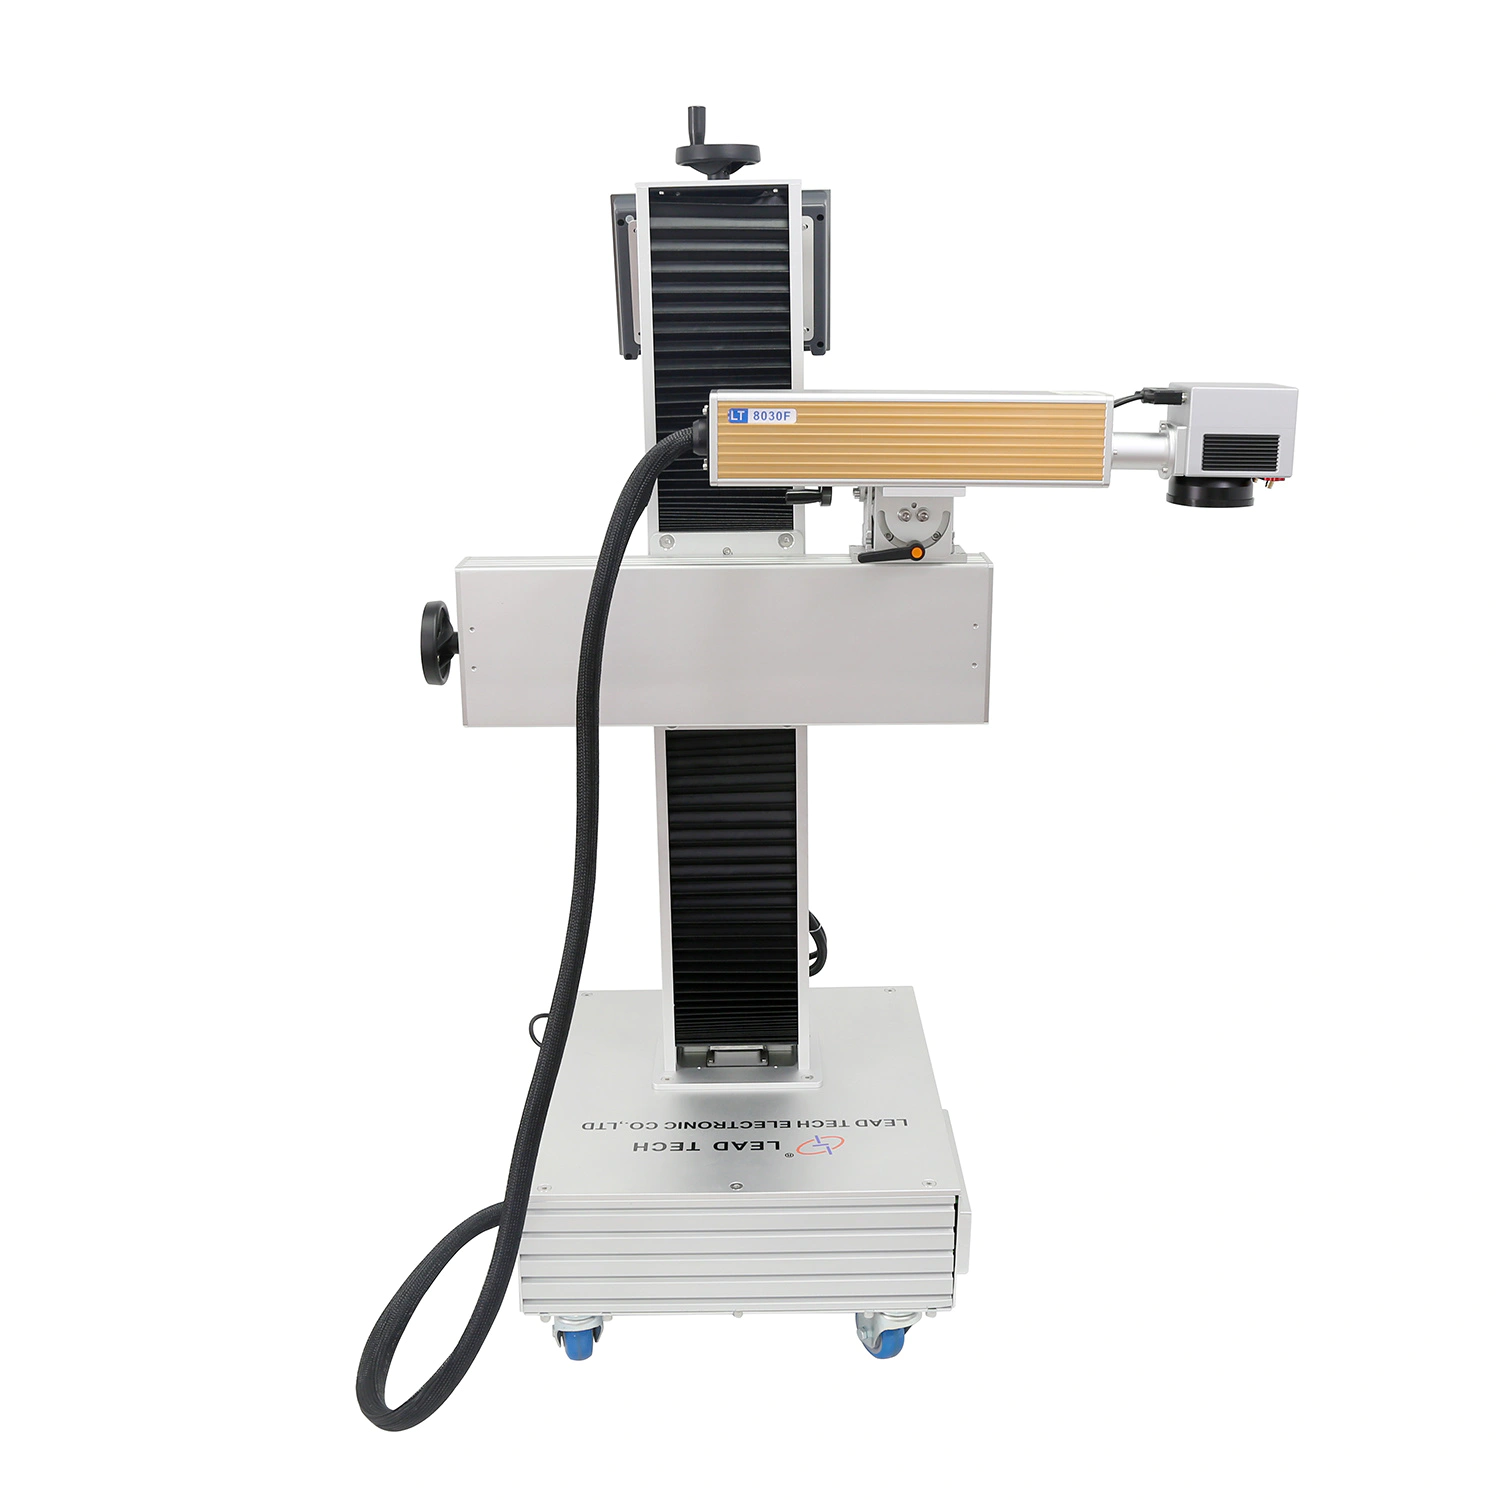 Lead Tech Lt8020f/Lt8030f/Lt8050f Laser Engraver Dating Industrial Printer